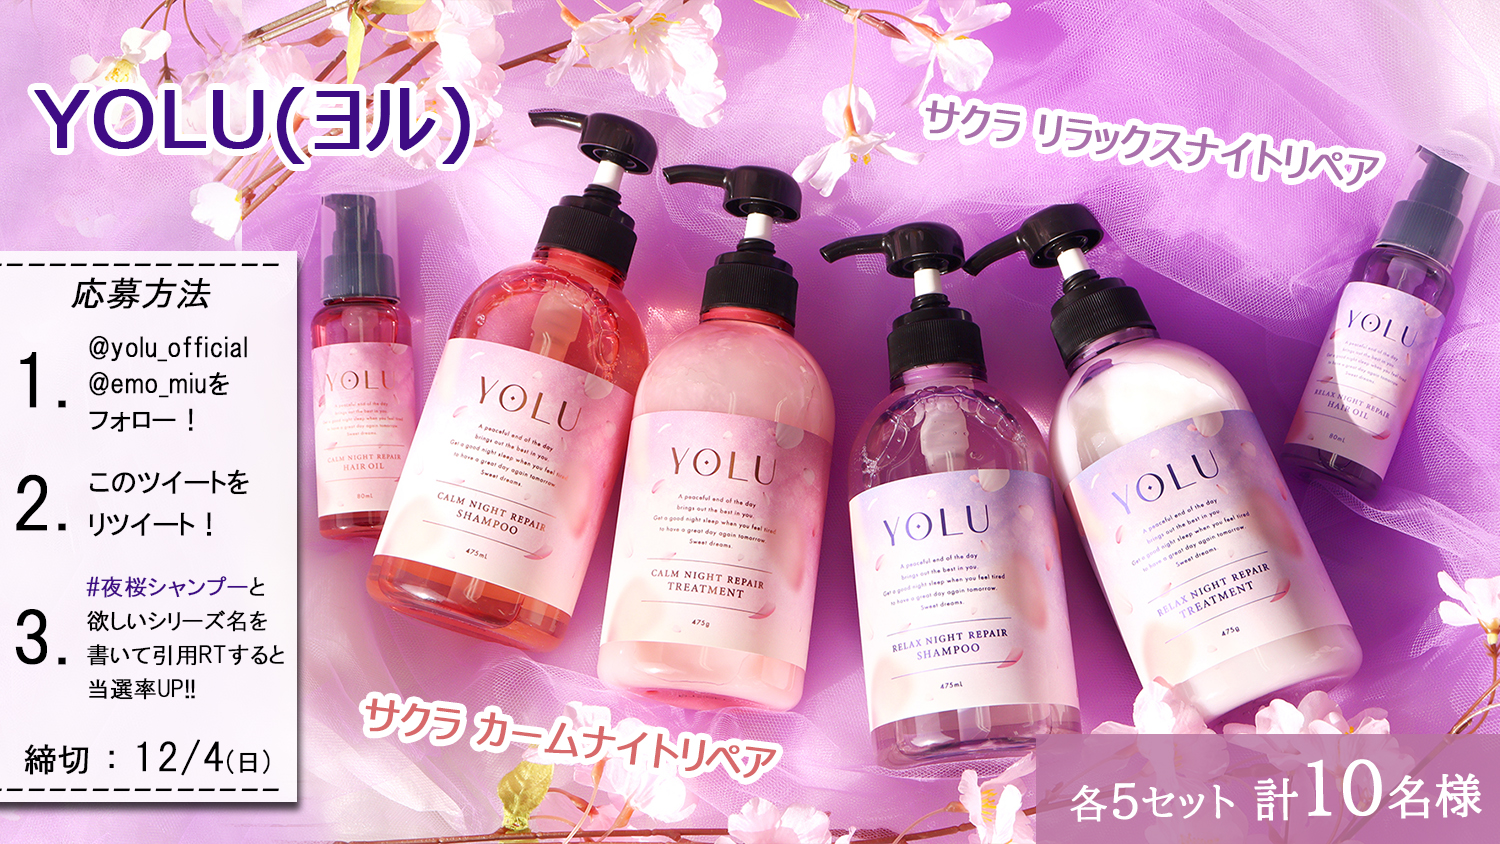 YOLU(ヨル)初の夜桜シャンプー「サクラナイトリペアシリーズ」誕生 